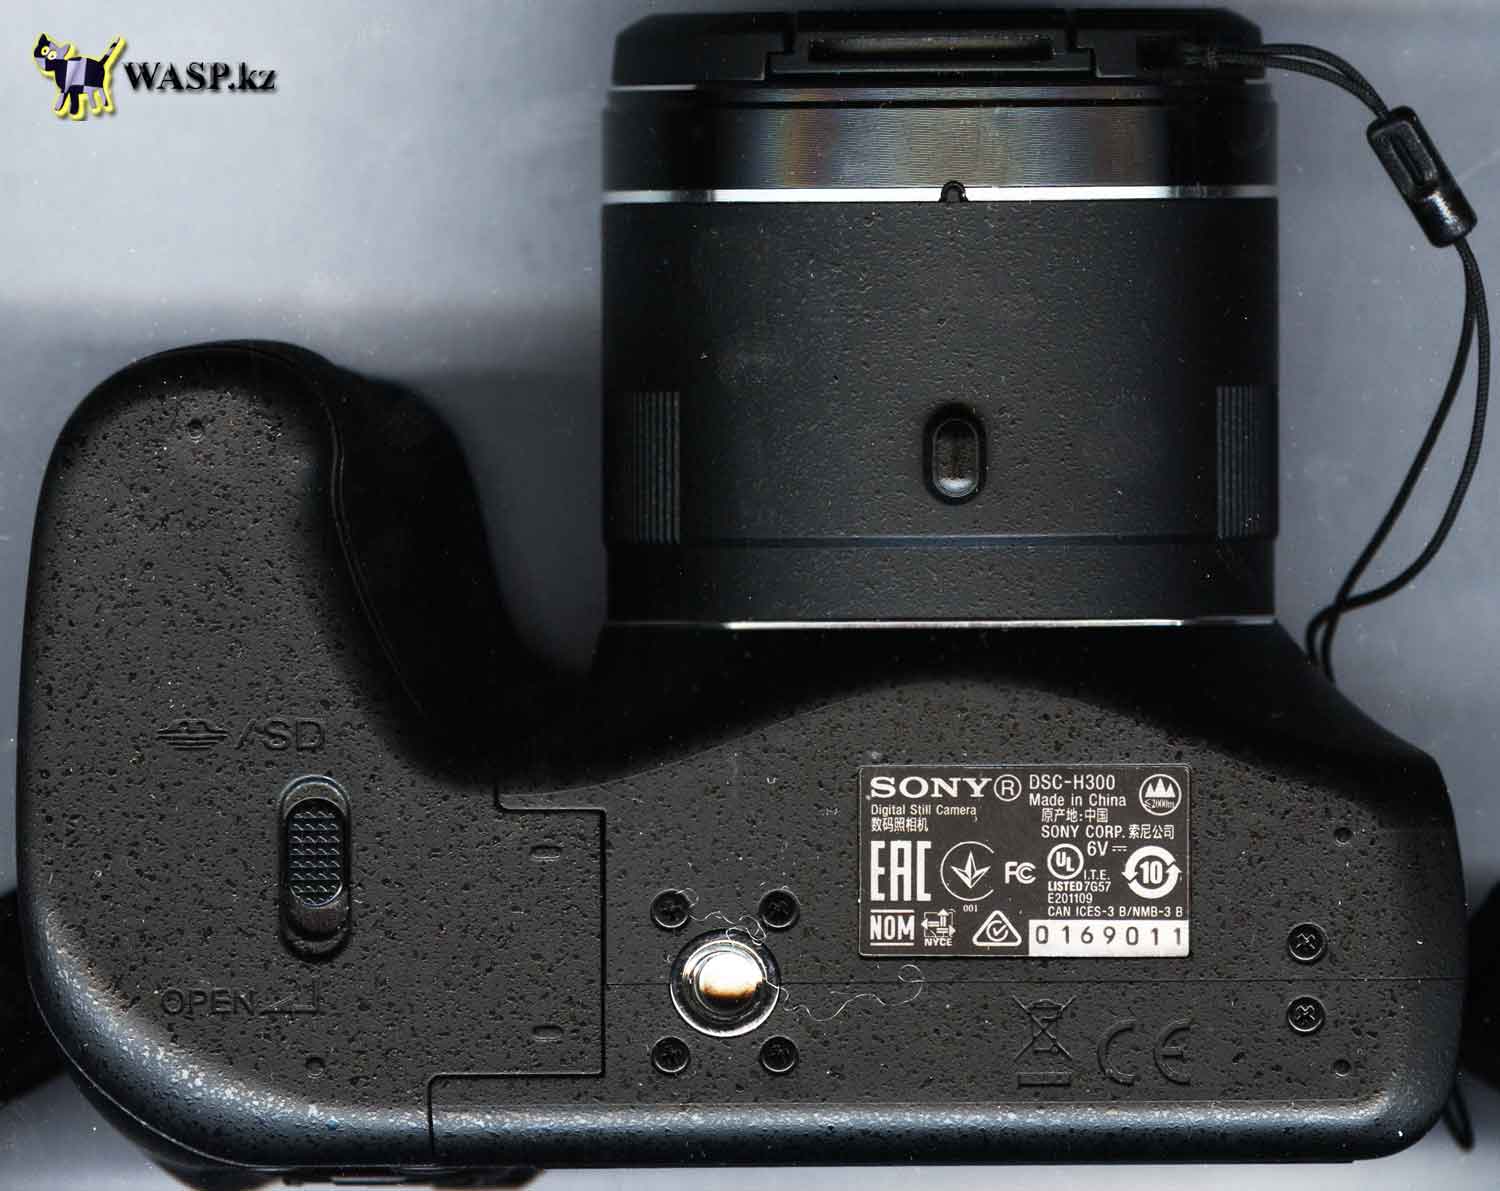 Sony Cyber-shot DSC-H300 нижняя часть аппарата